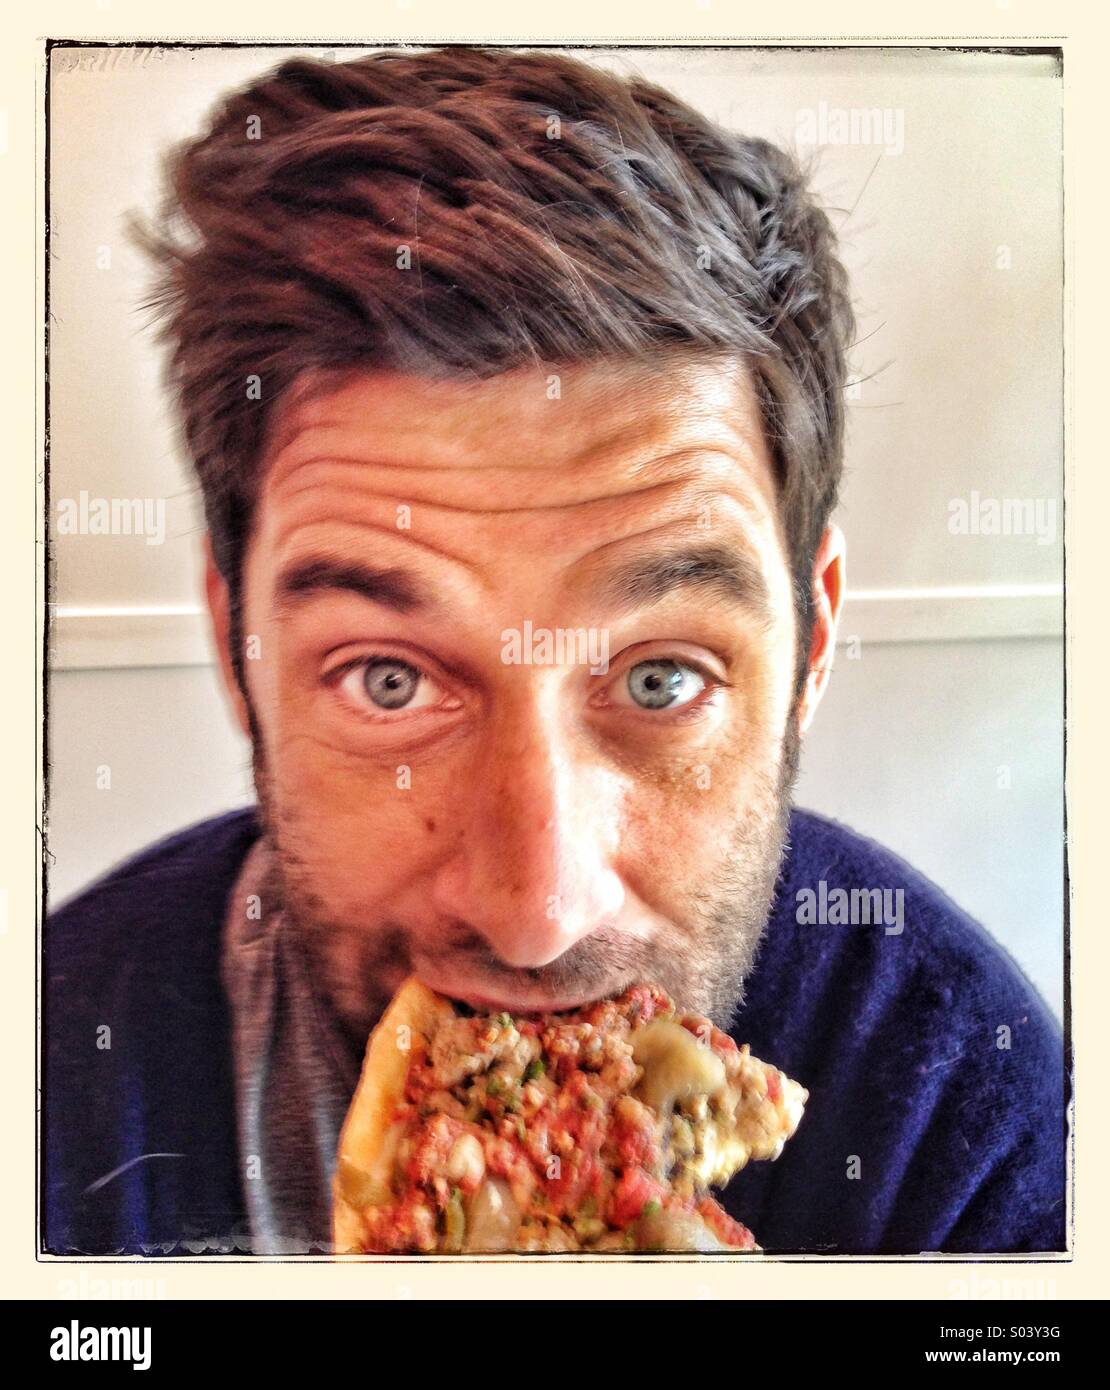 Guy eating pizza Stock Photo